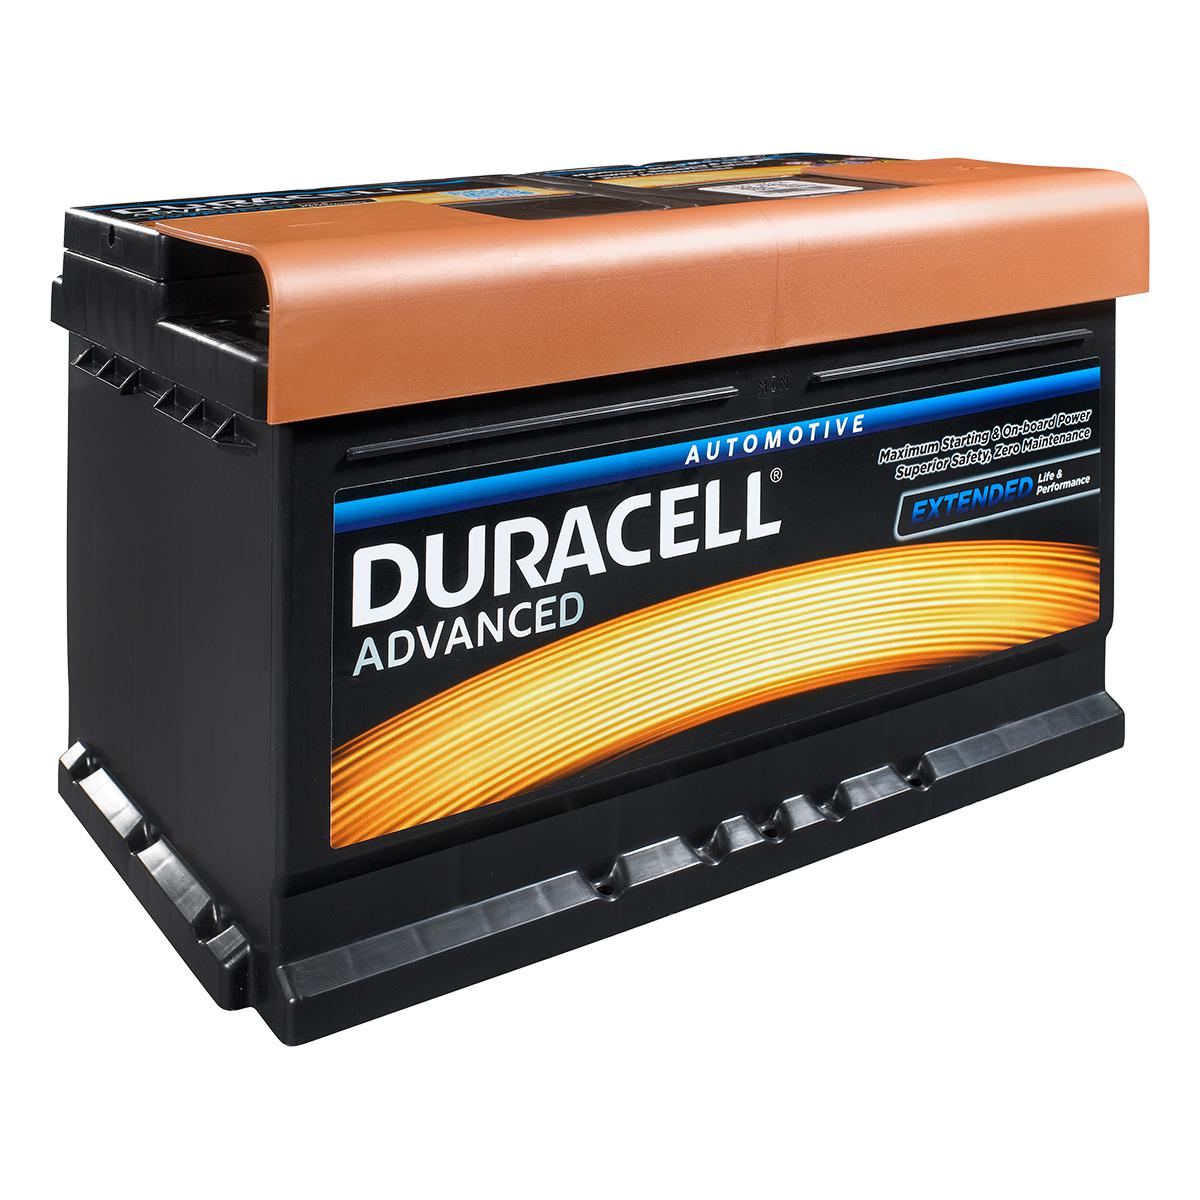 Duracell 110 / DA80 Advanced Car Battery - www.batterycharged.co.uk